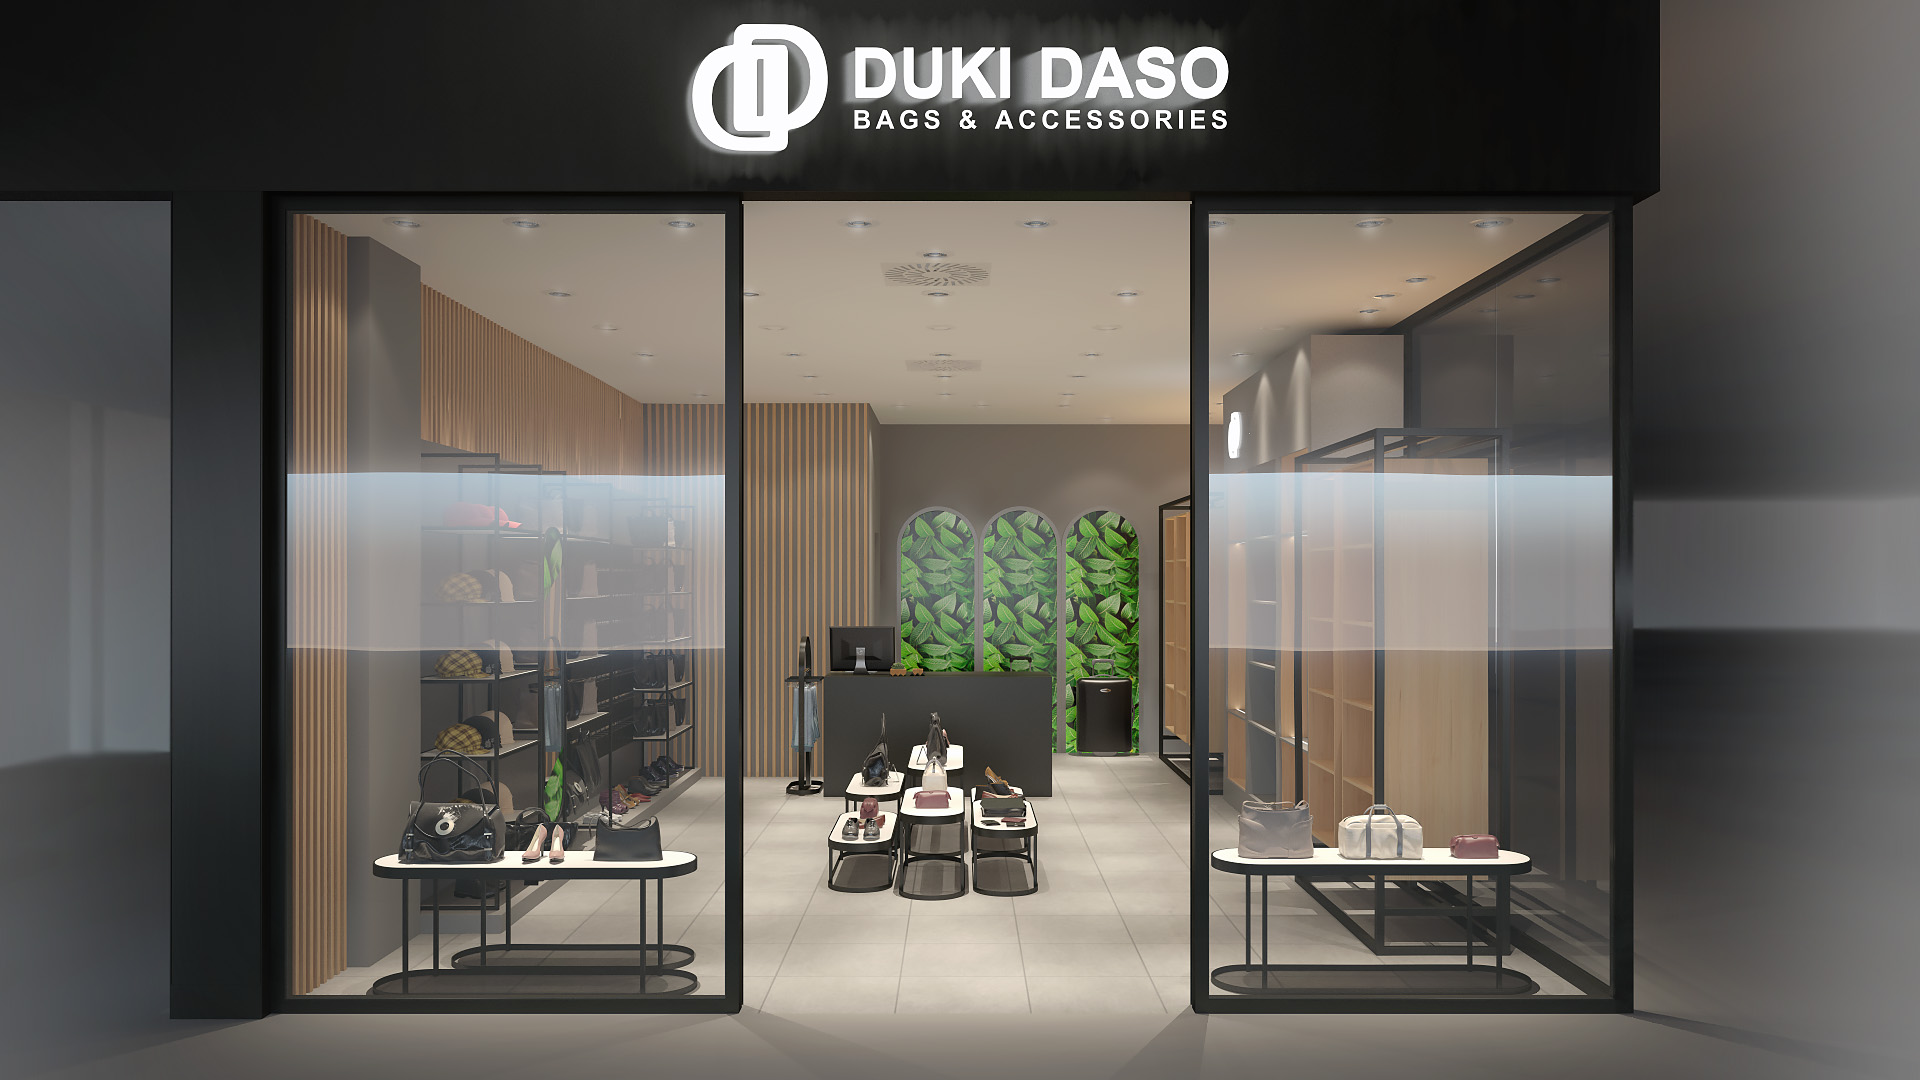 Duki Daso BIG Fashion SC store